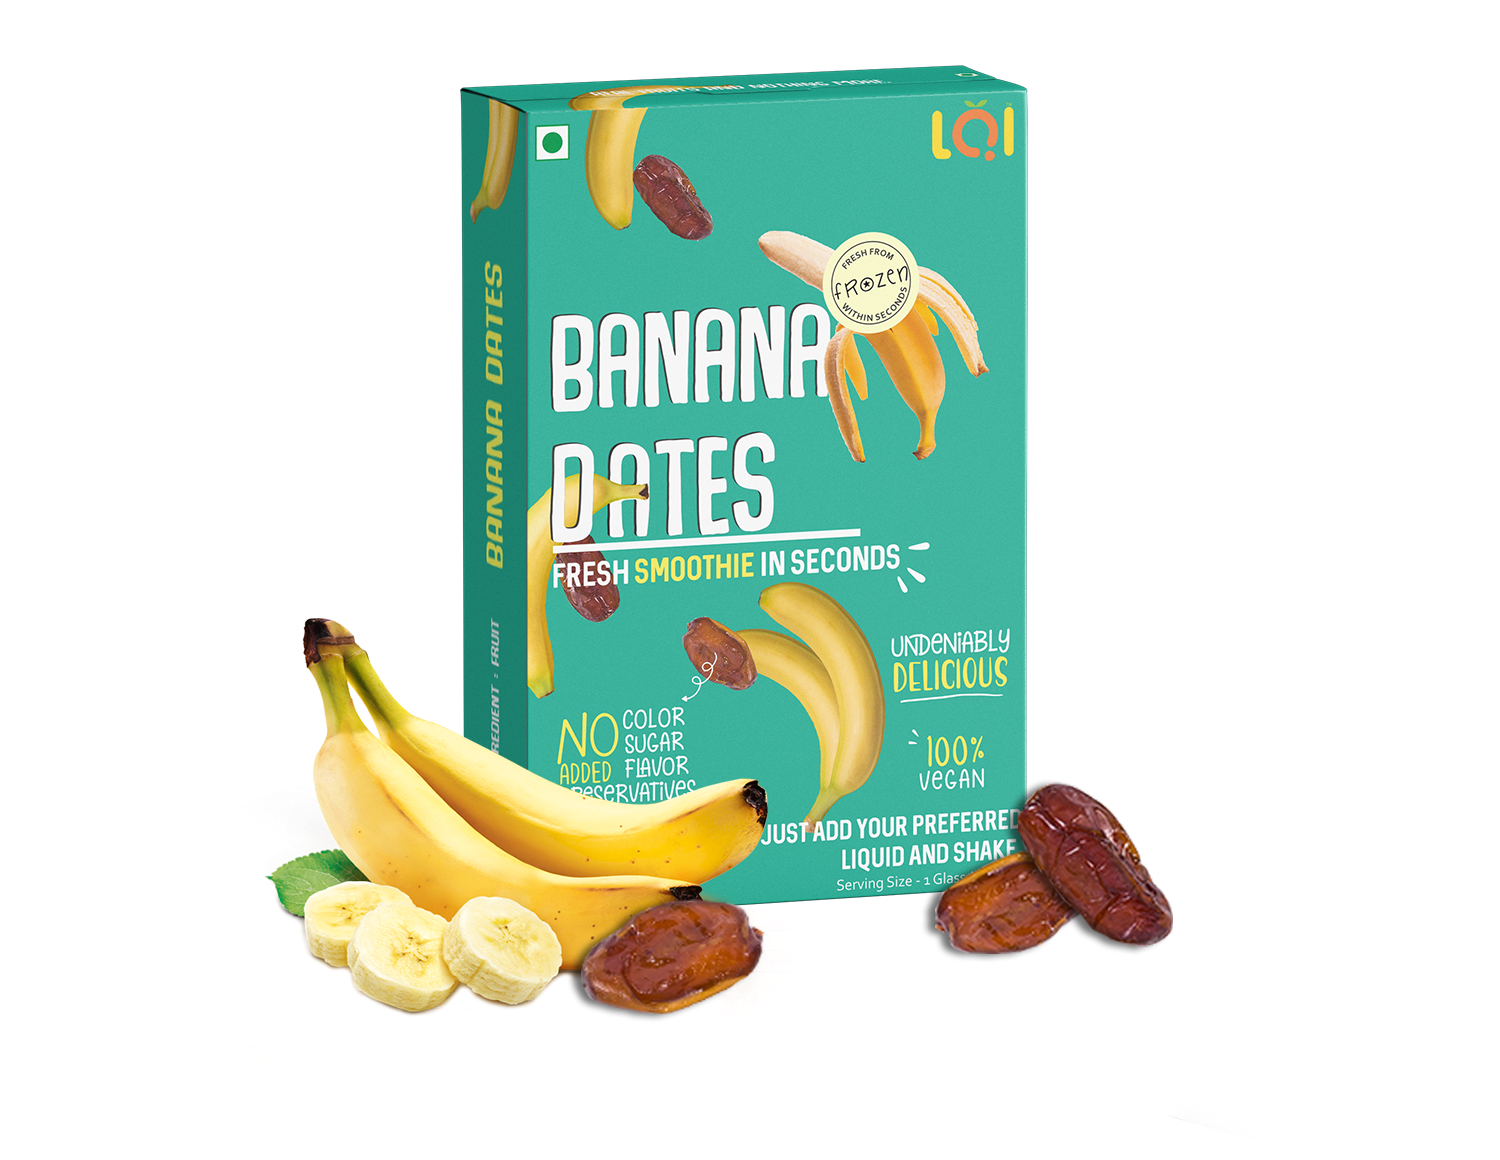 Banana Dates Image